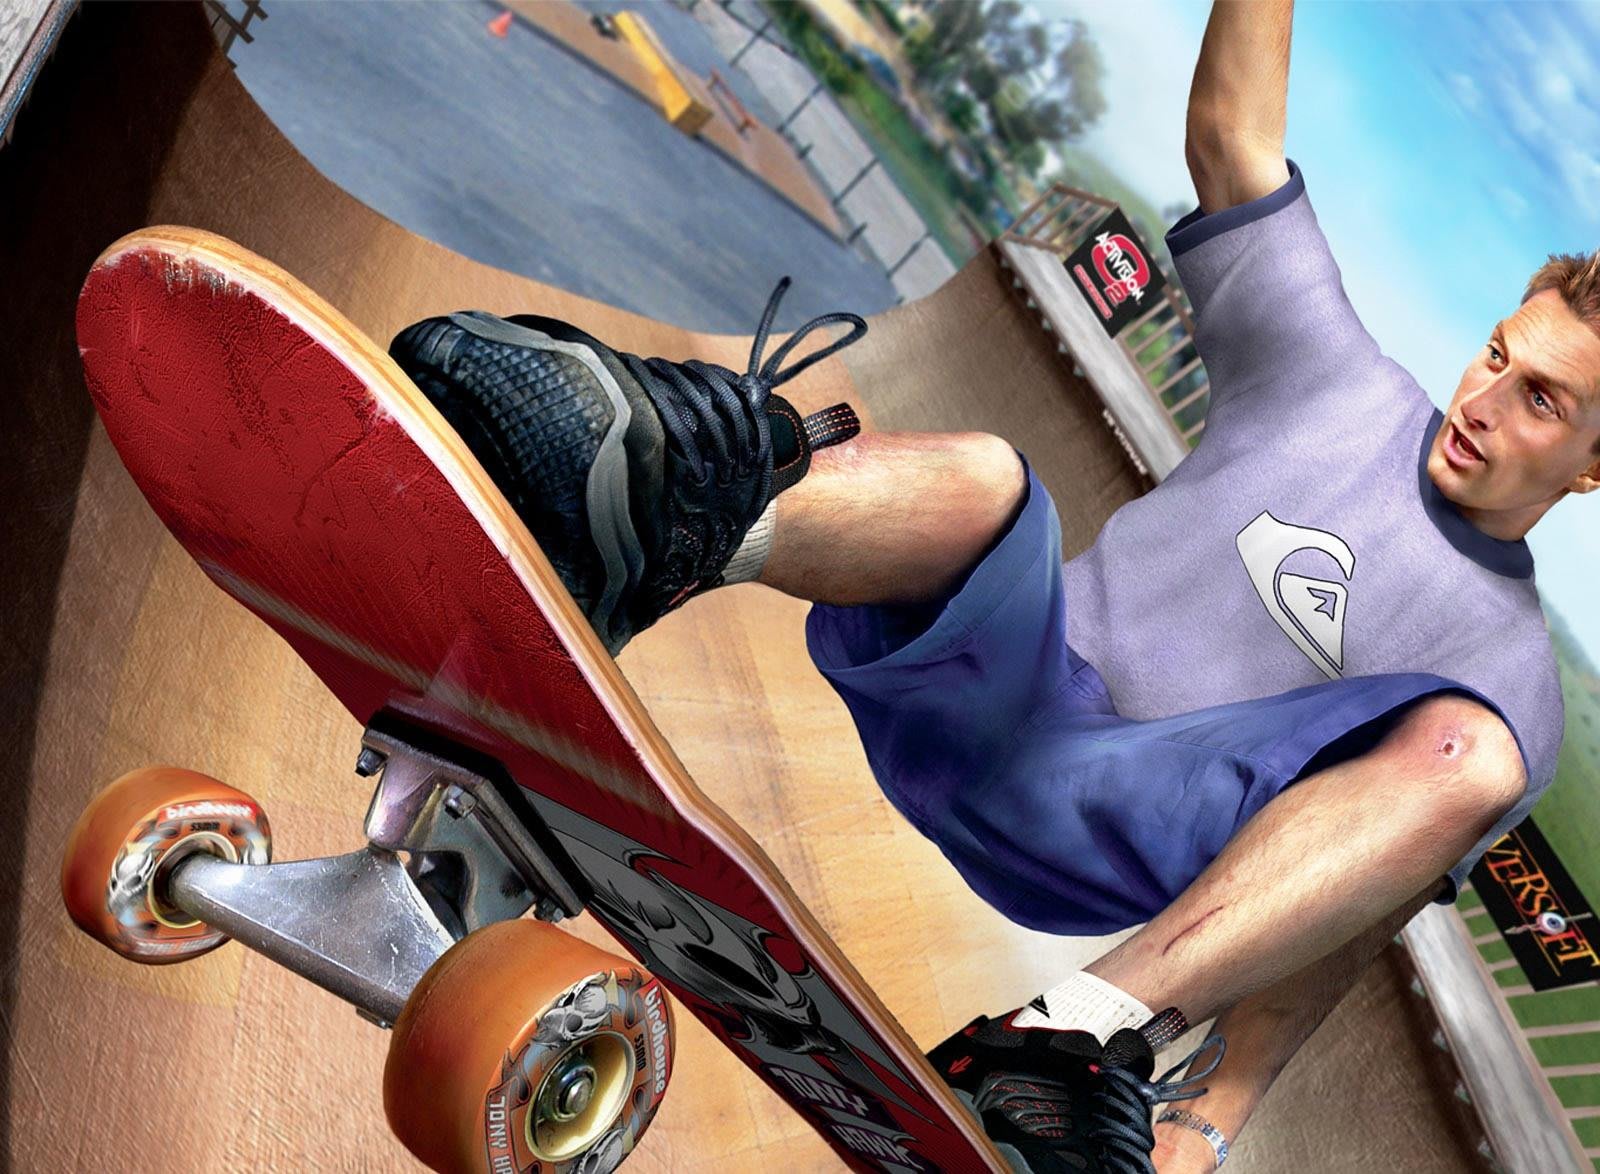  Backyard Skateboarding - PC : Video Games